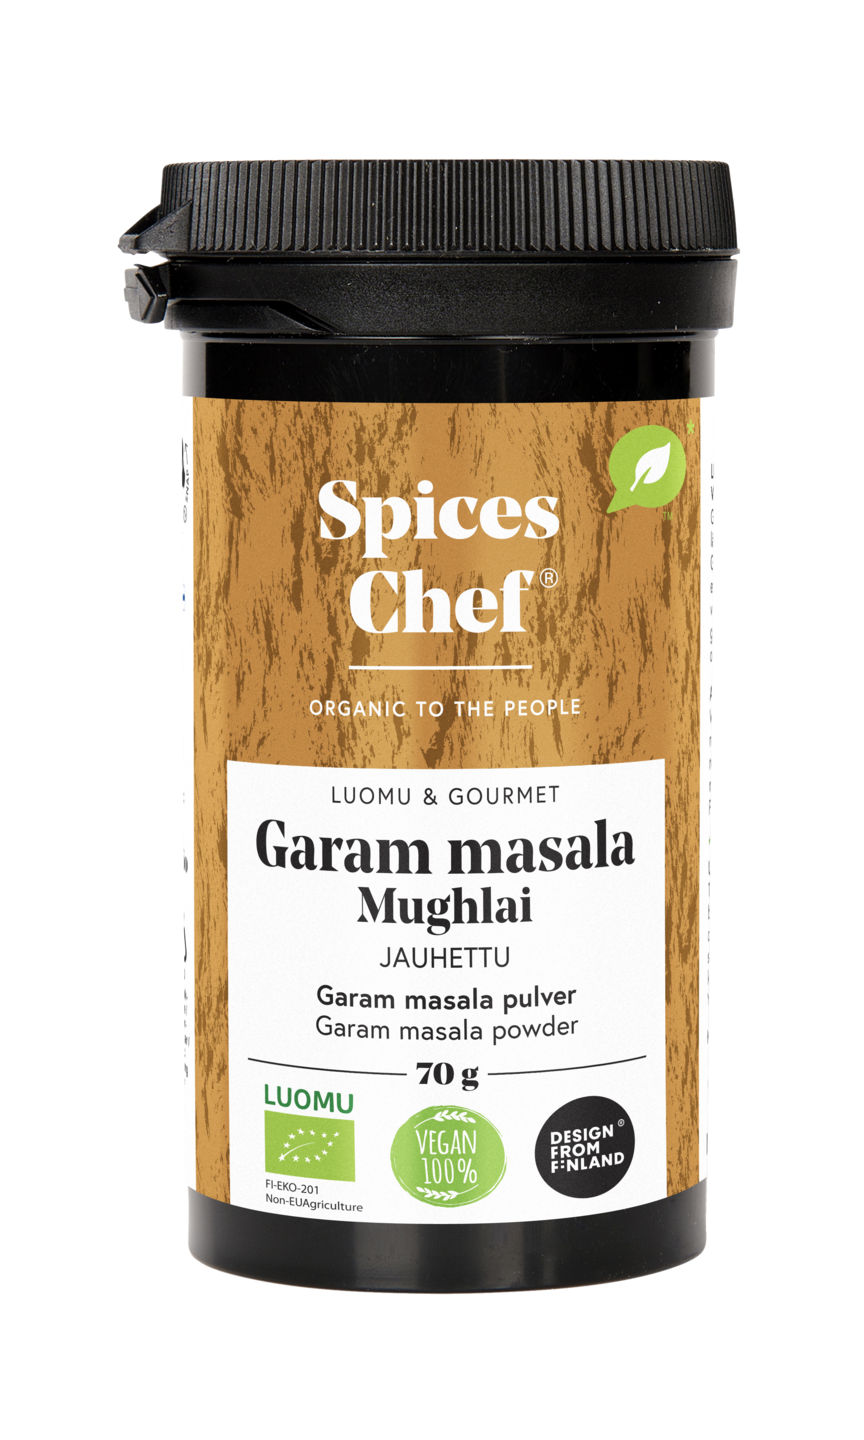 Spices Chef luomu Garam masala jauhettu 70g, BPA-vapaassa biomuovi maustepurkissa